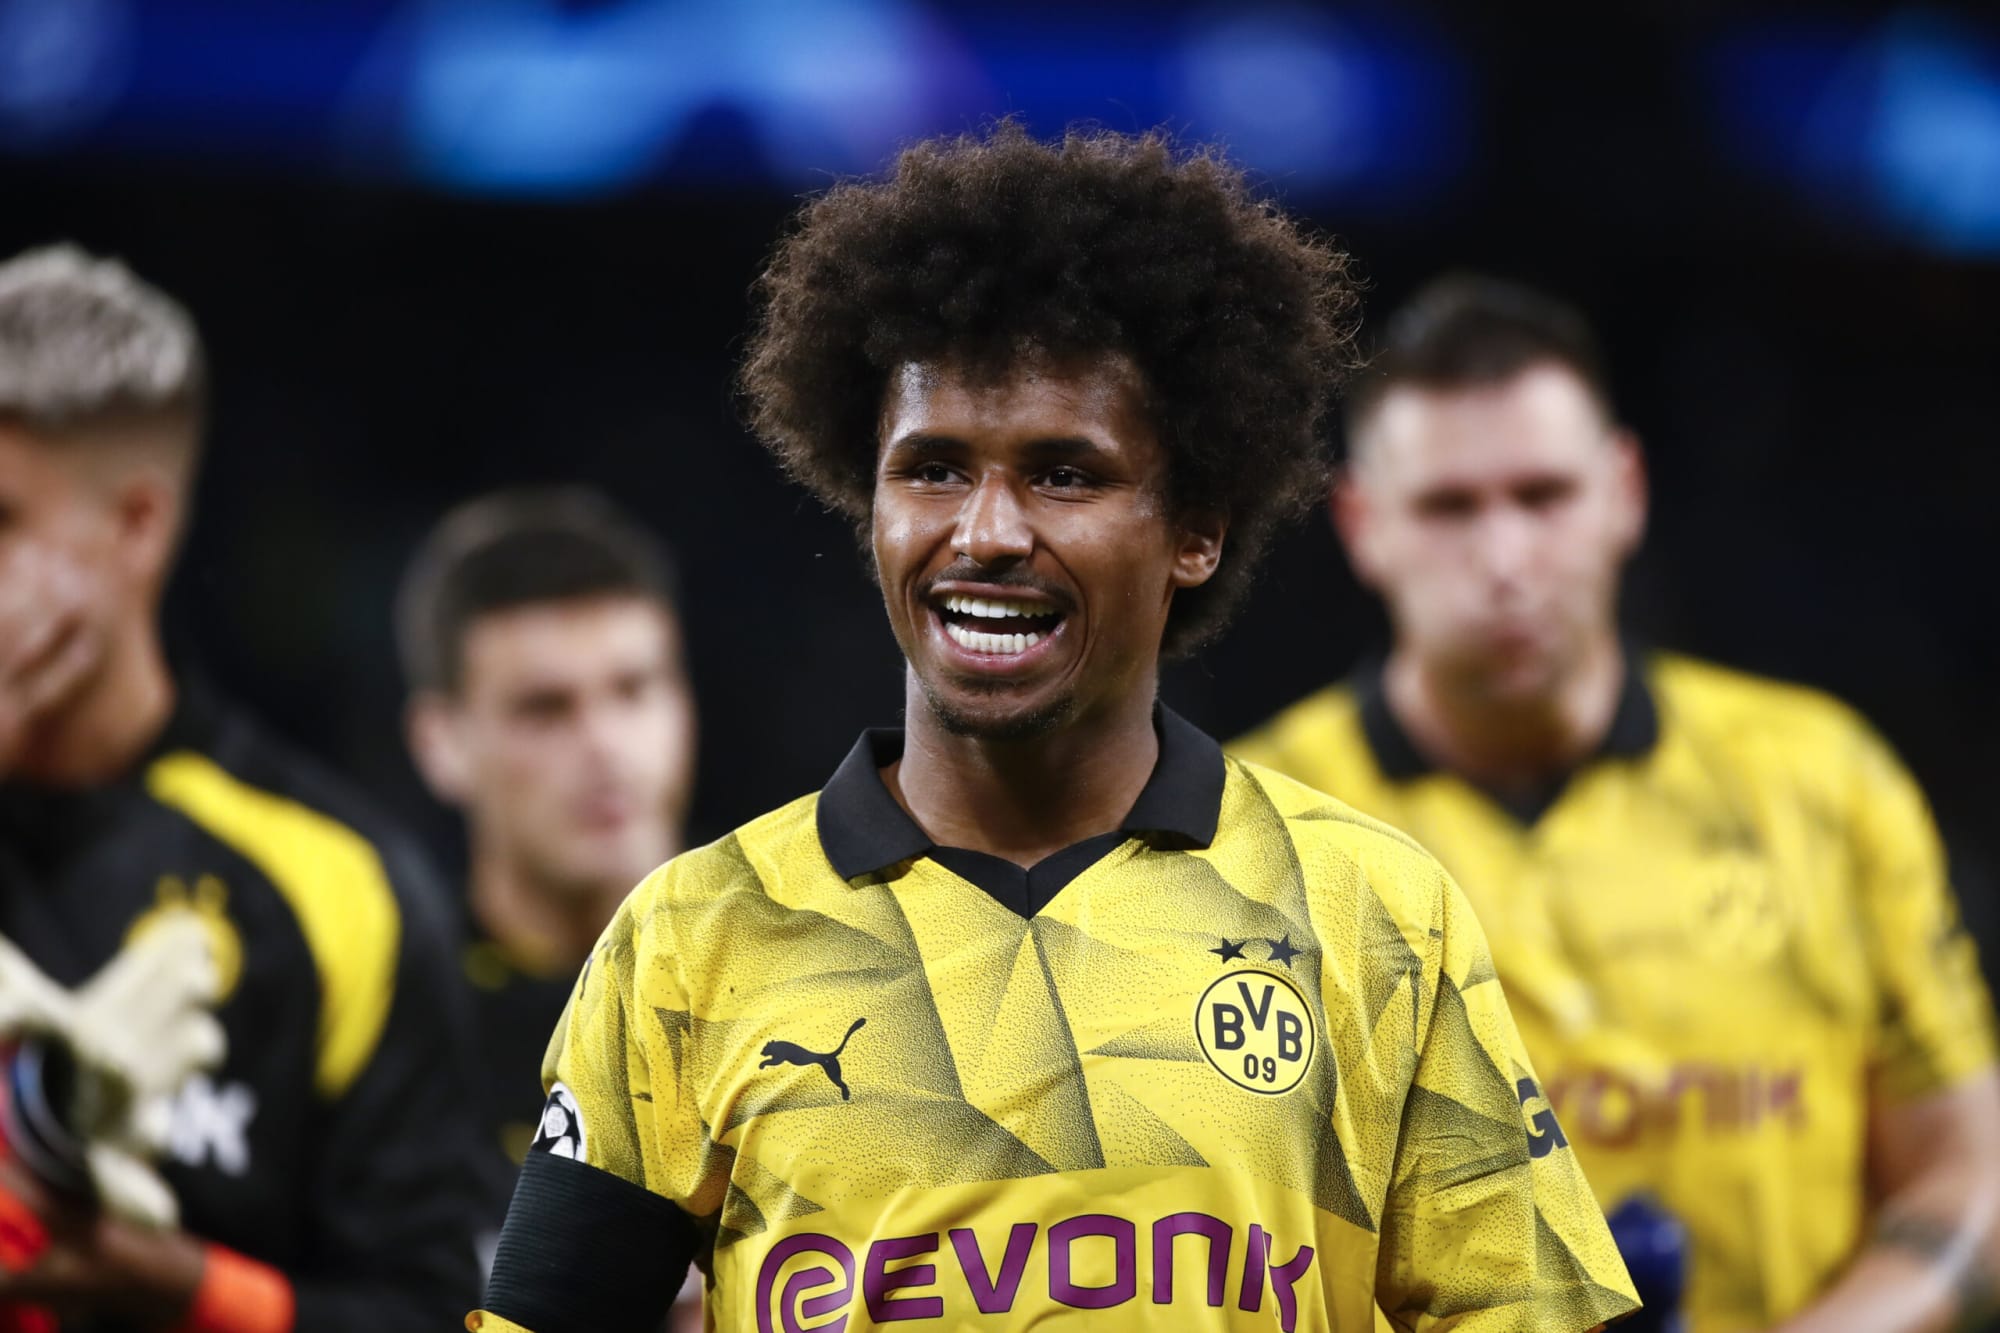 PSG 2-0 Borussia Dortmund: Key takeaways from Champions League defeat